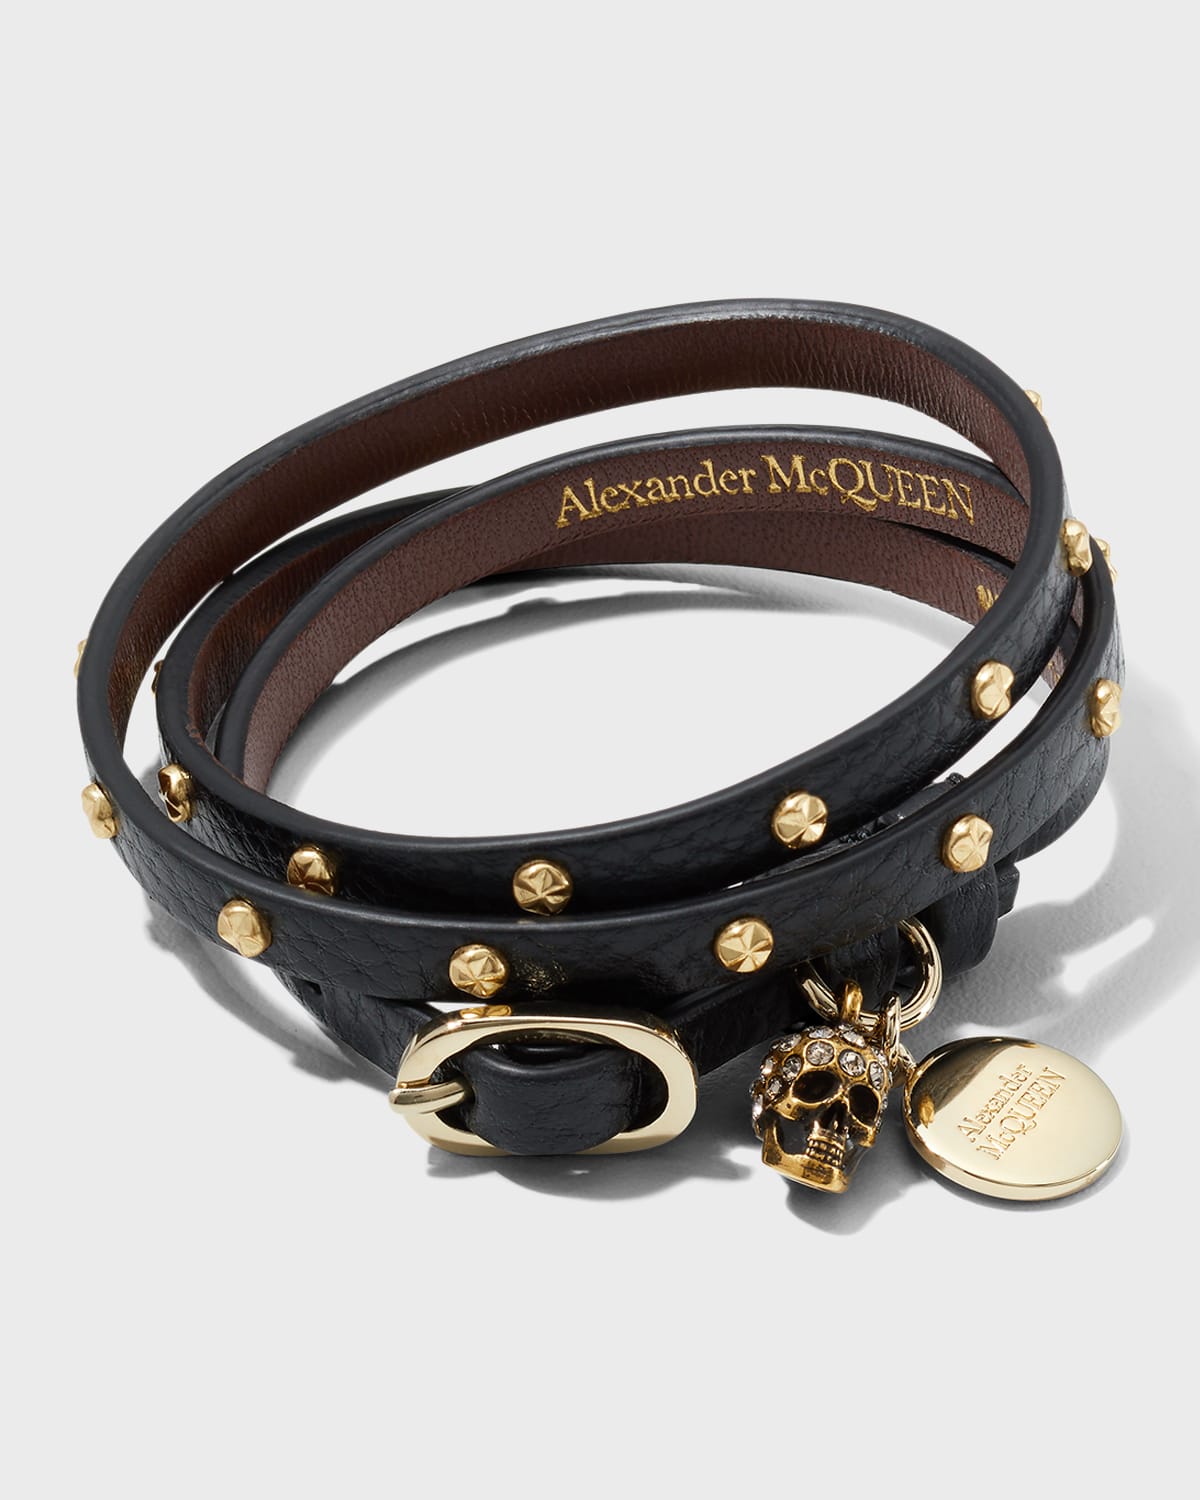 Alexander McQueen Skull Leather Wrap Bracelet